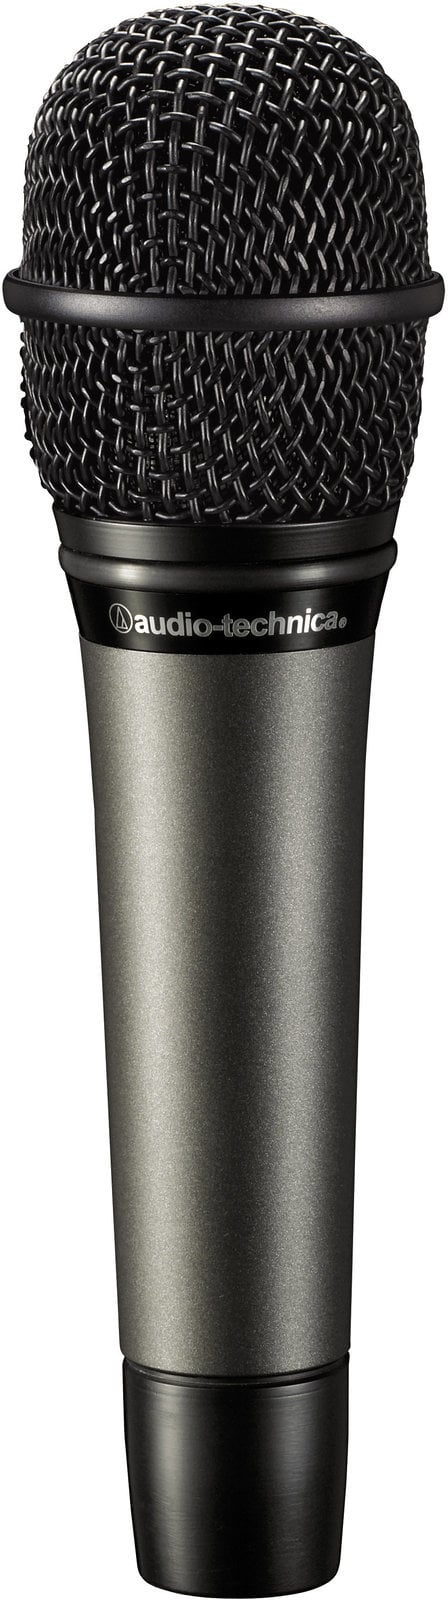 Microfone dinâmico para voz Audio-Technica ATM610a Microfone dinâmico para voz